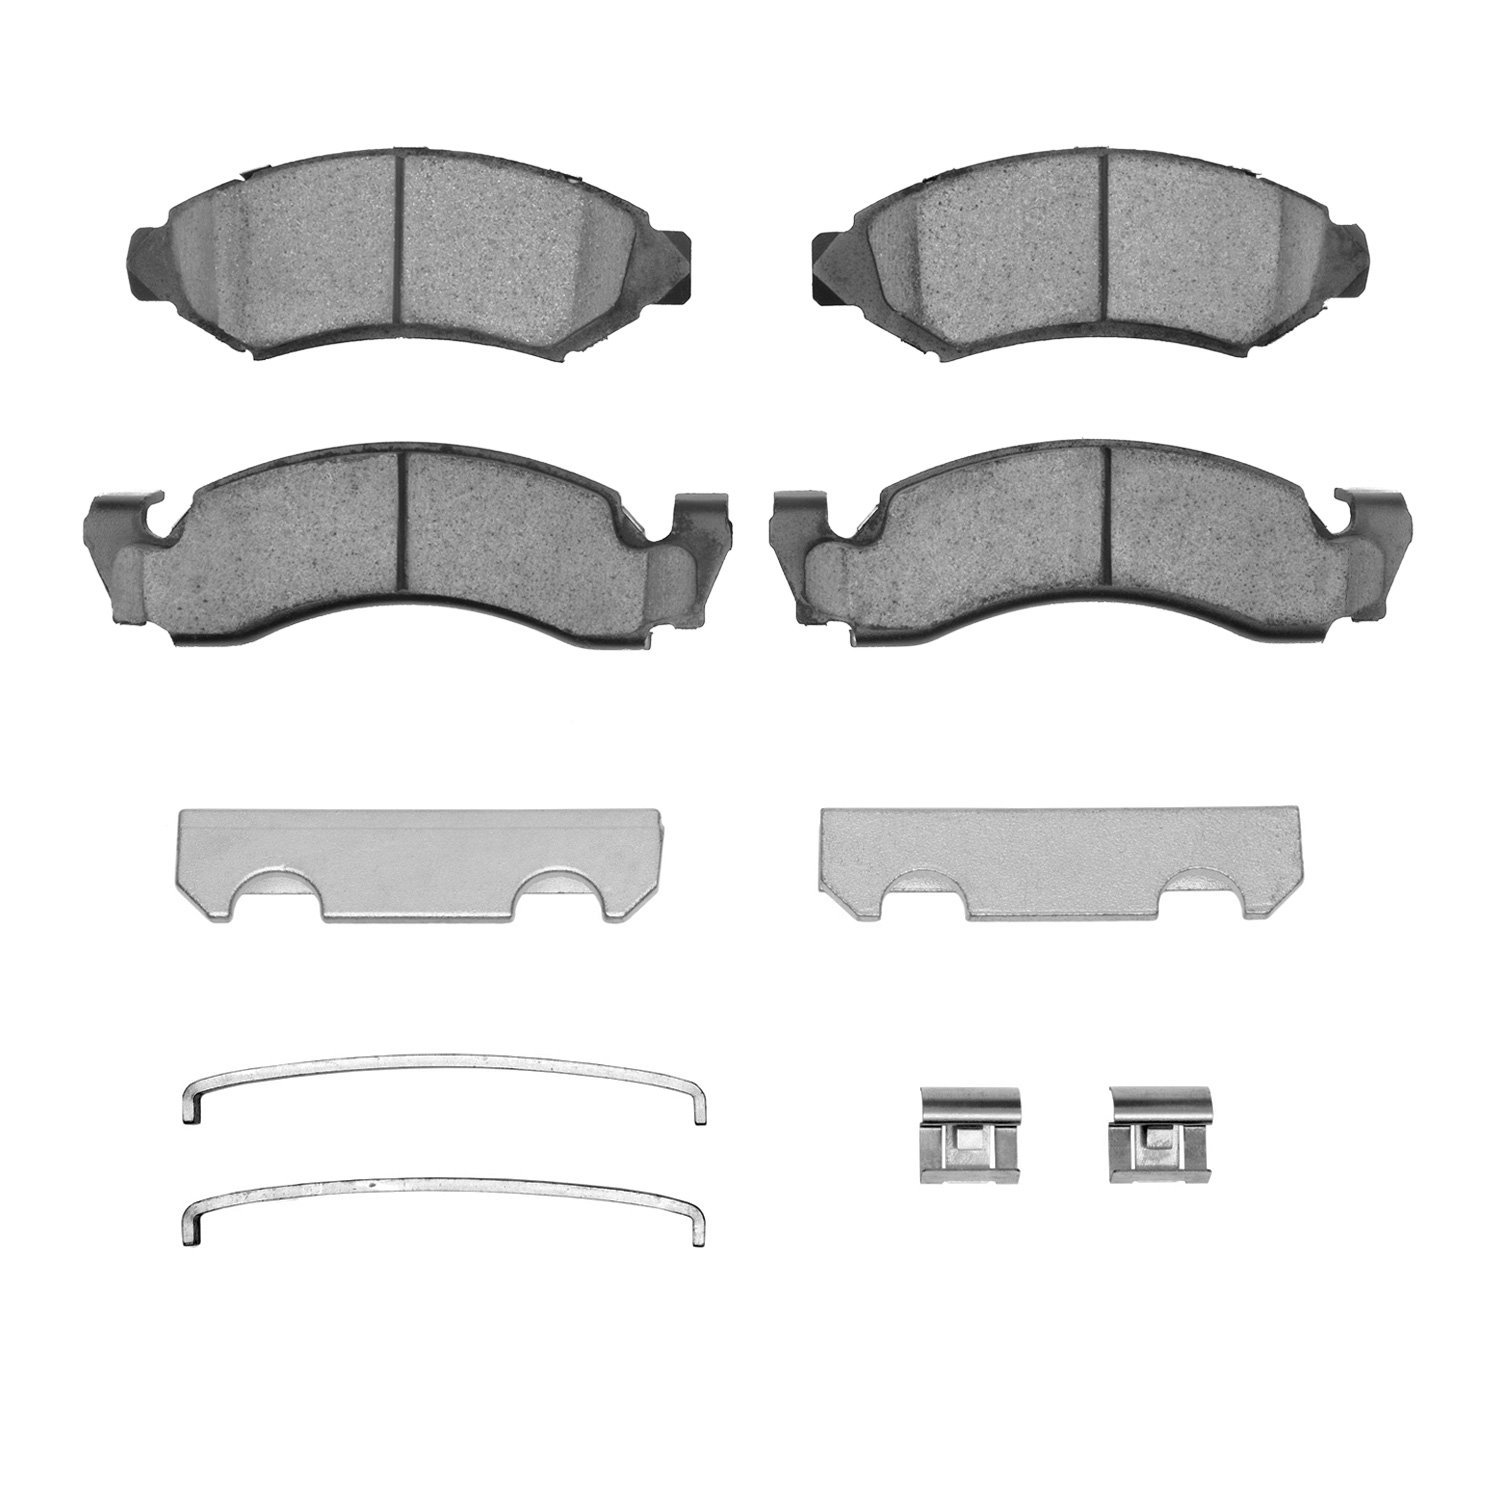 1310-0050-01 3000-Series Ceramic Brake Pads & Hardware Kit, 1973-1985 Multiple Makes/Models, Position: Front